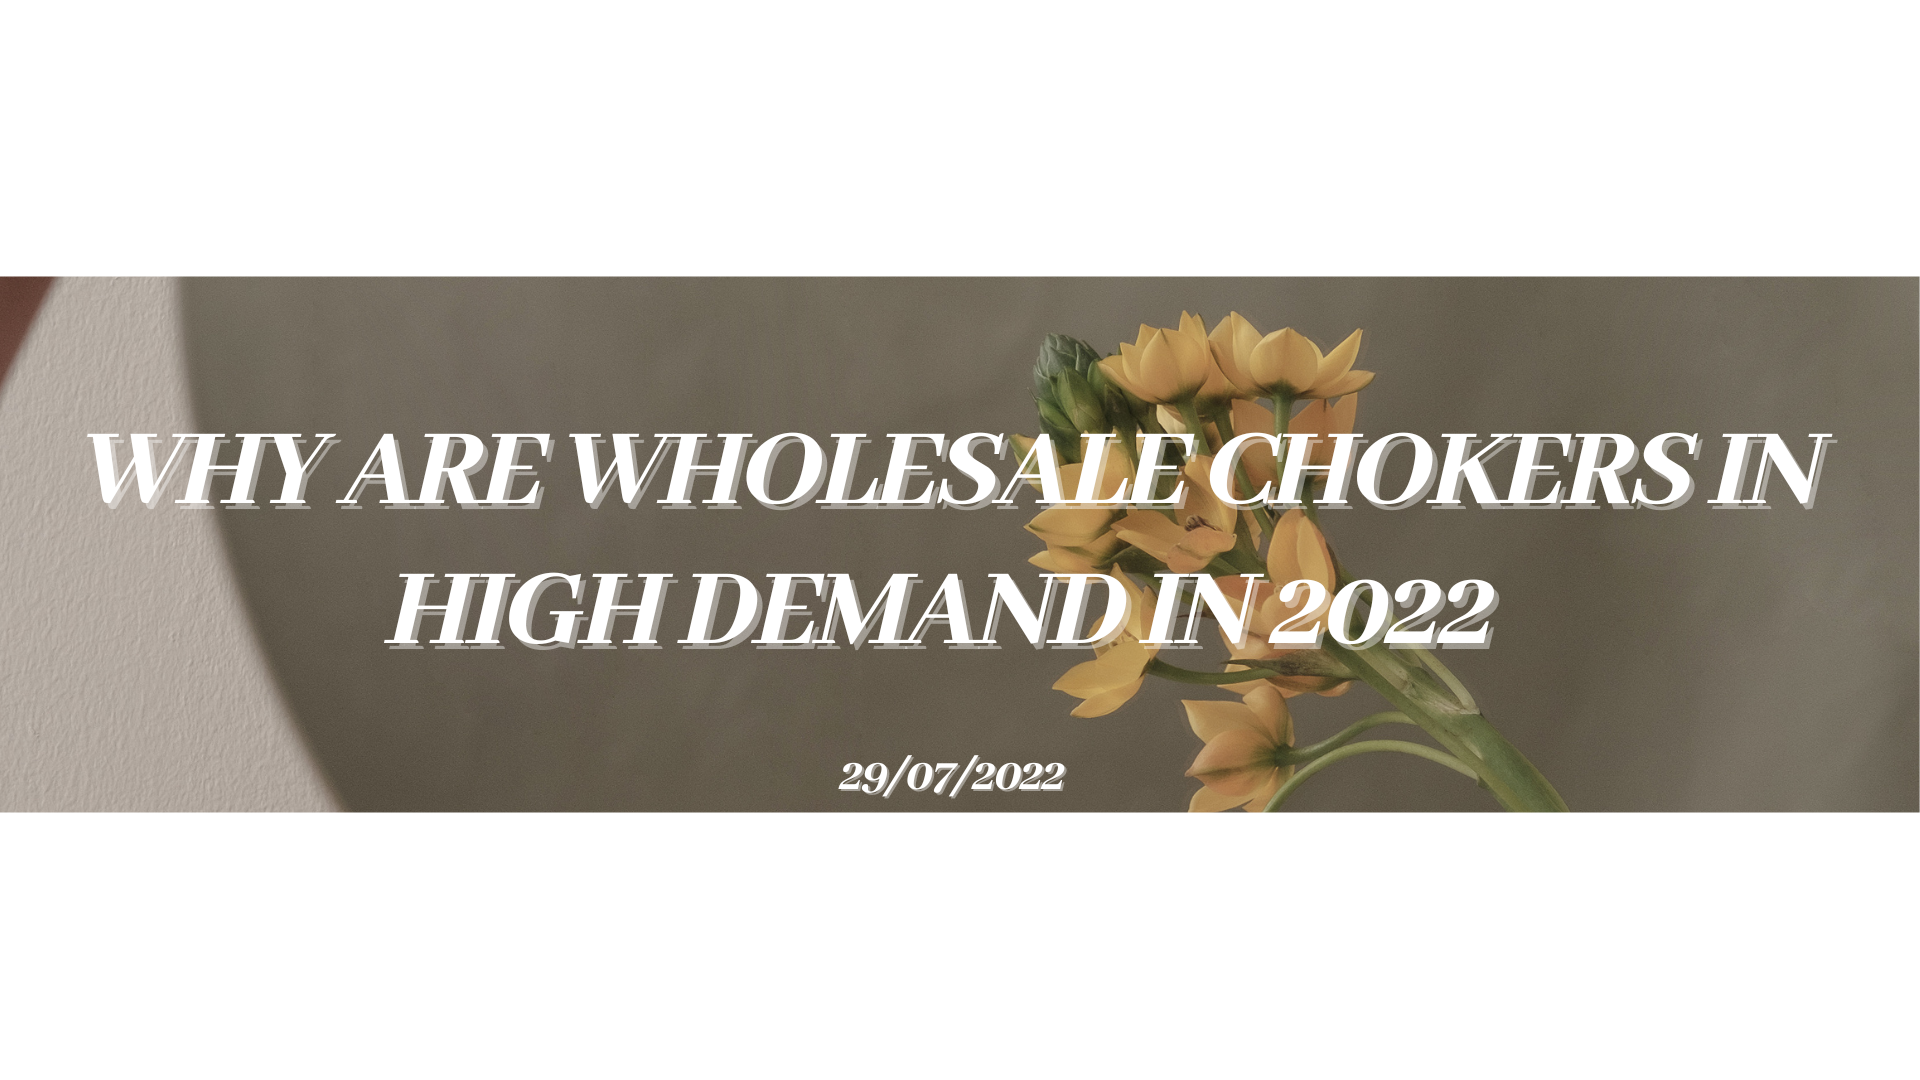 Wholesale Chokers